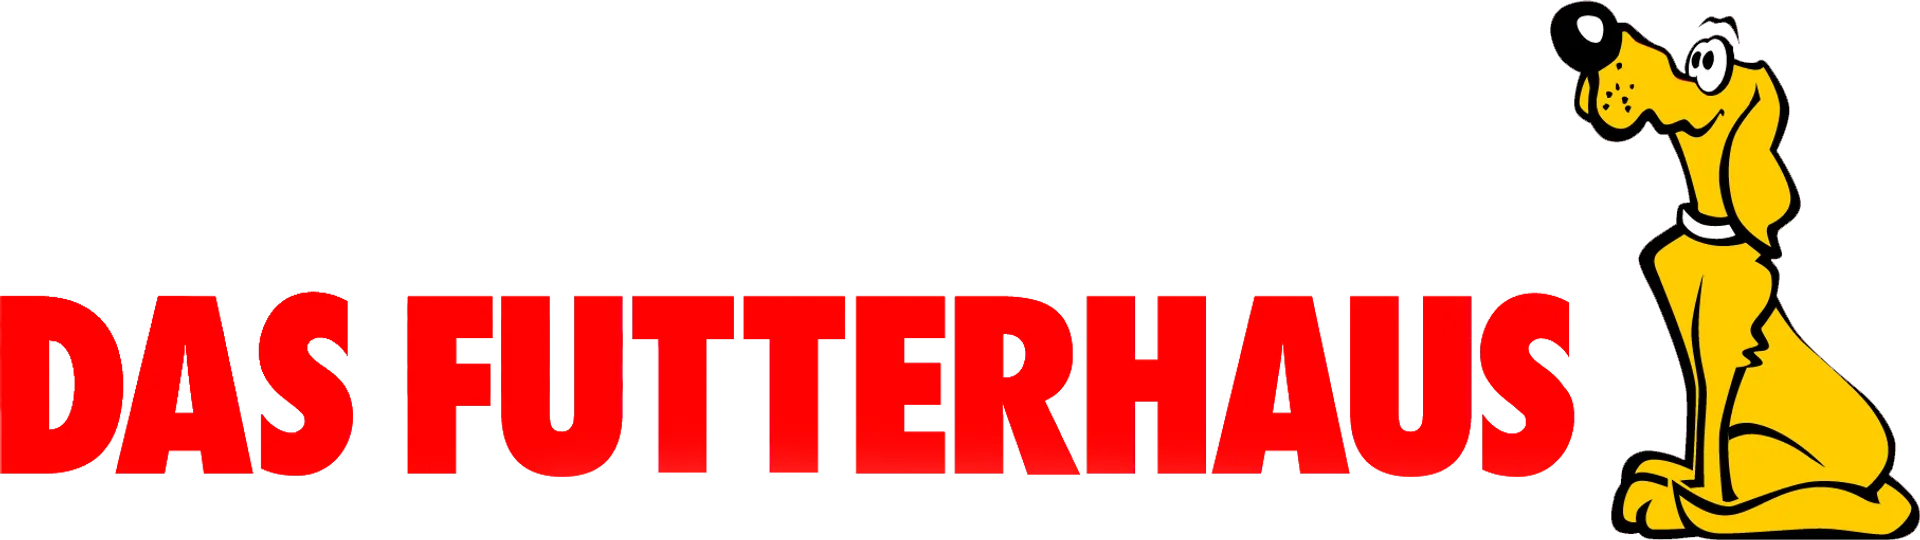 DAS FUTTERHAUS logo die aktuell Flugblatt